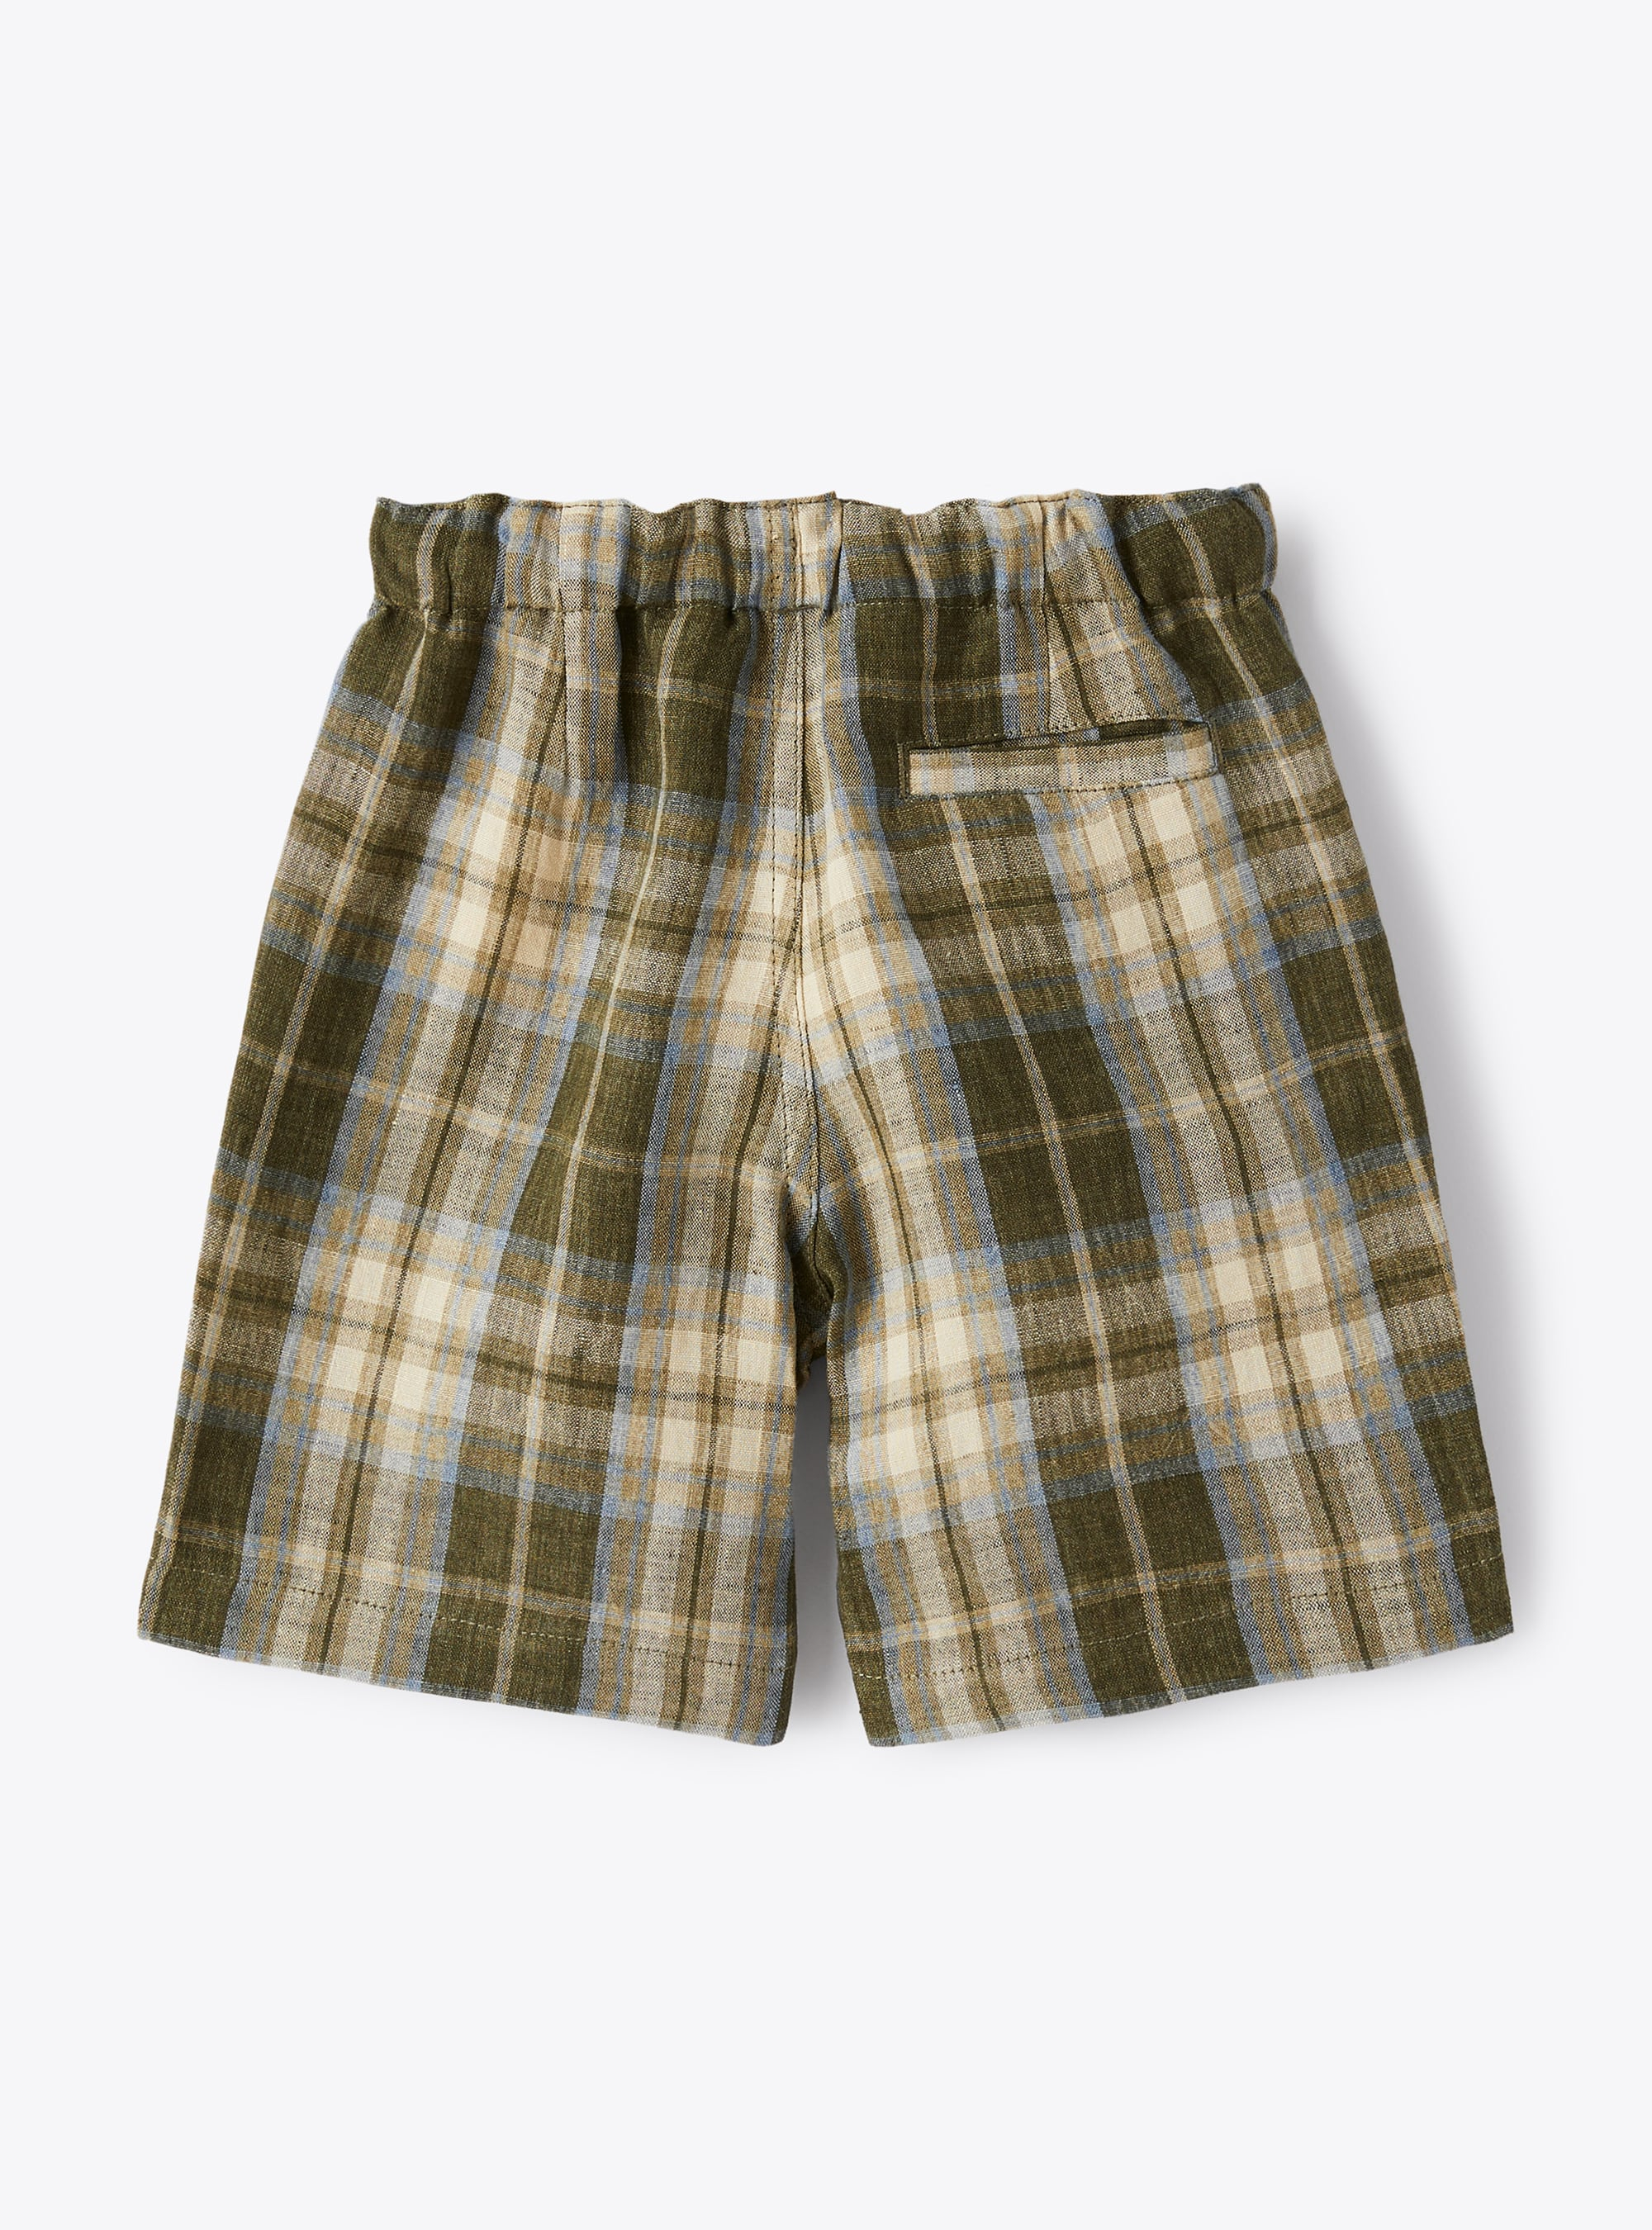 Bermuda shorts in madras-patterned linen - Green | Il Gufo